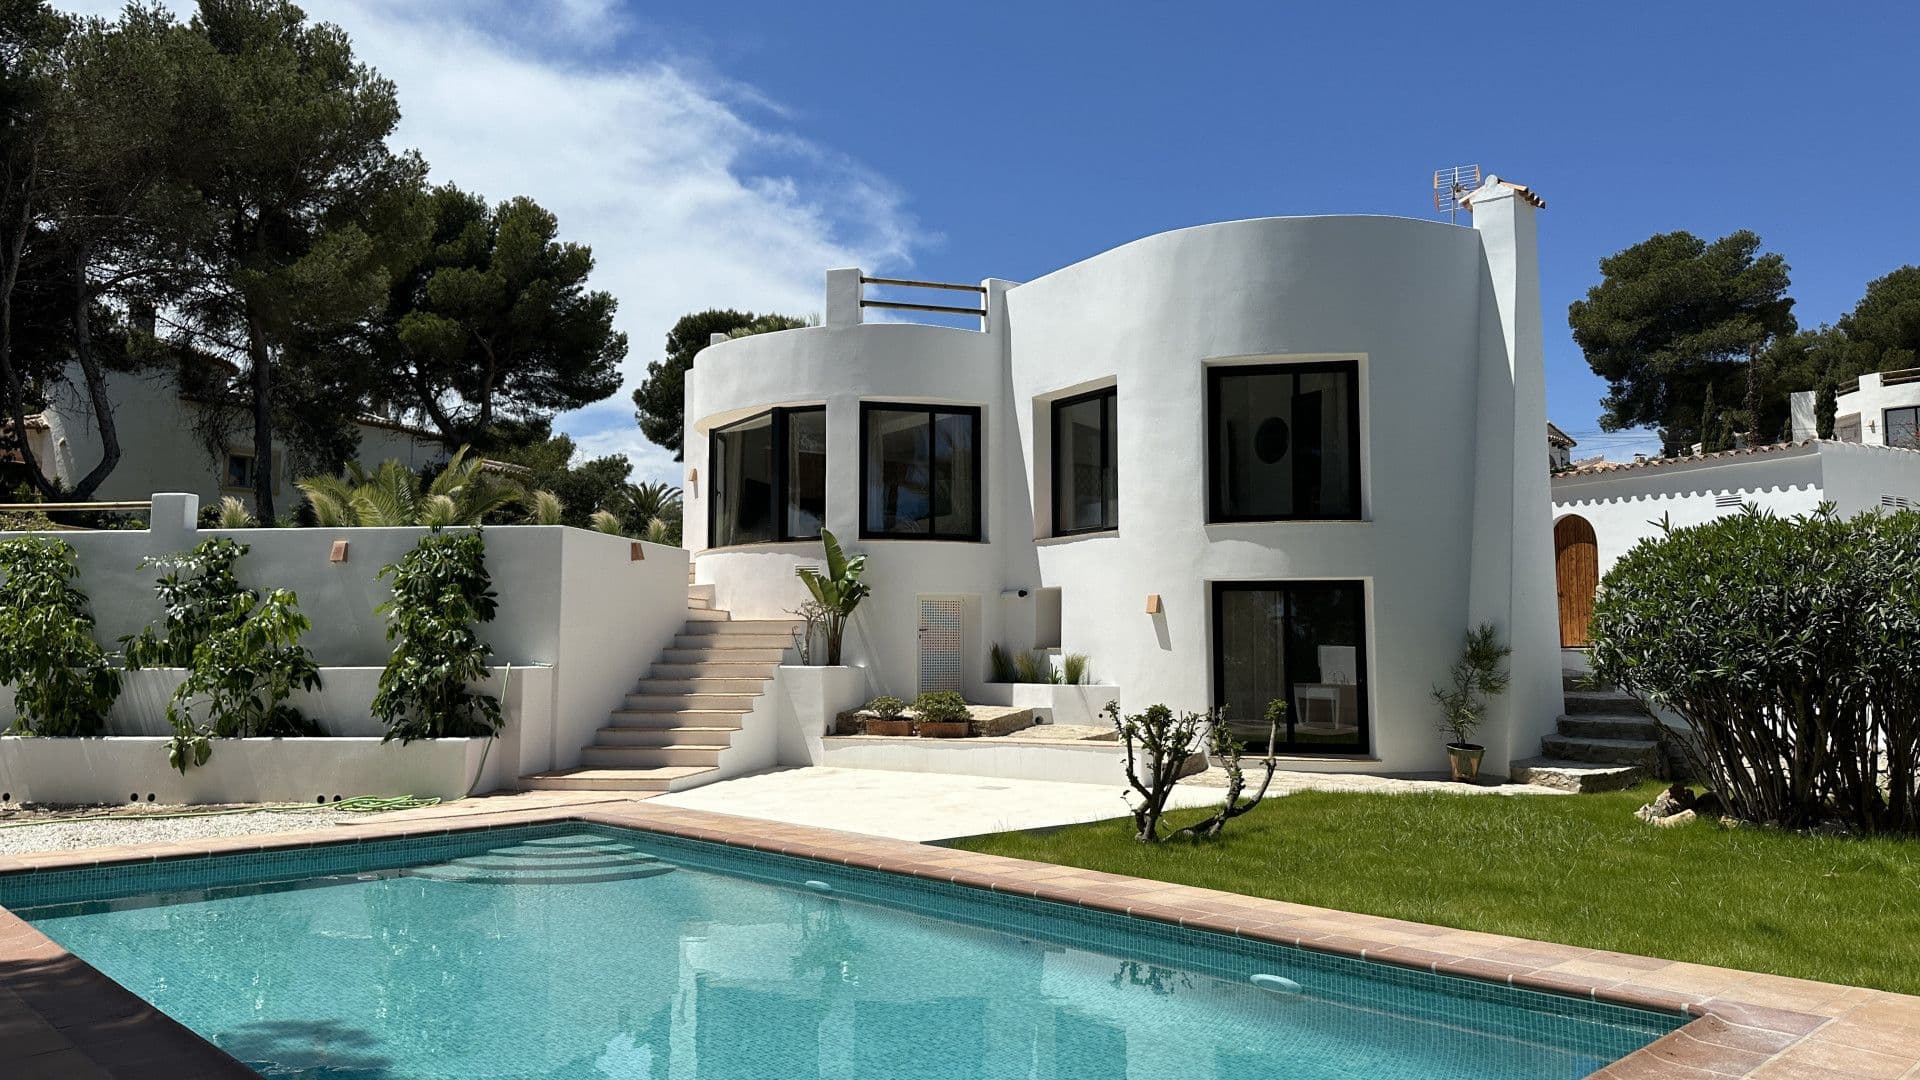 Ibizan style villa with sea views in the area of Cap Negre, Javea (Alicante)